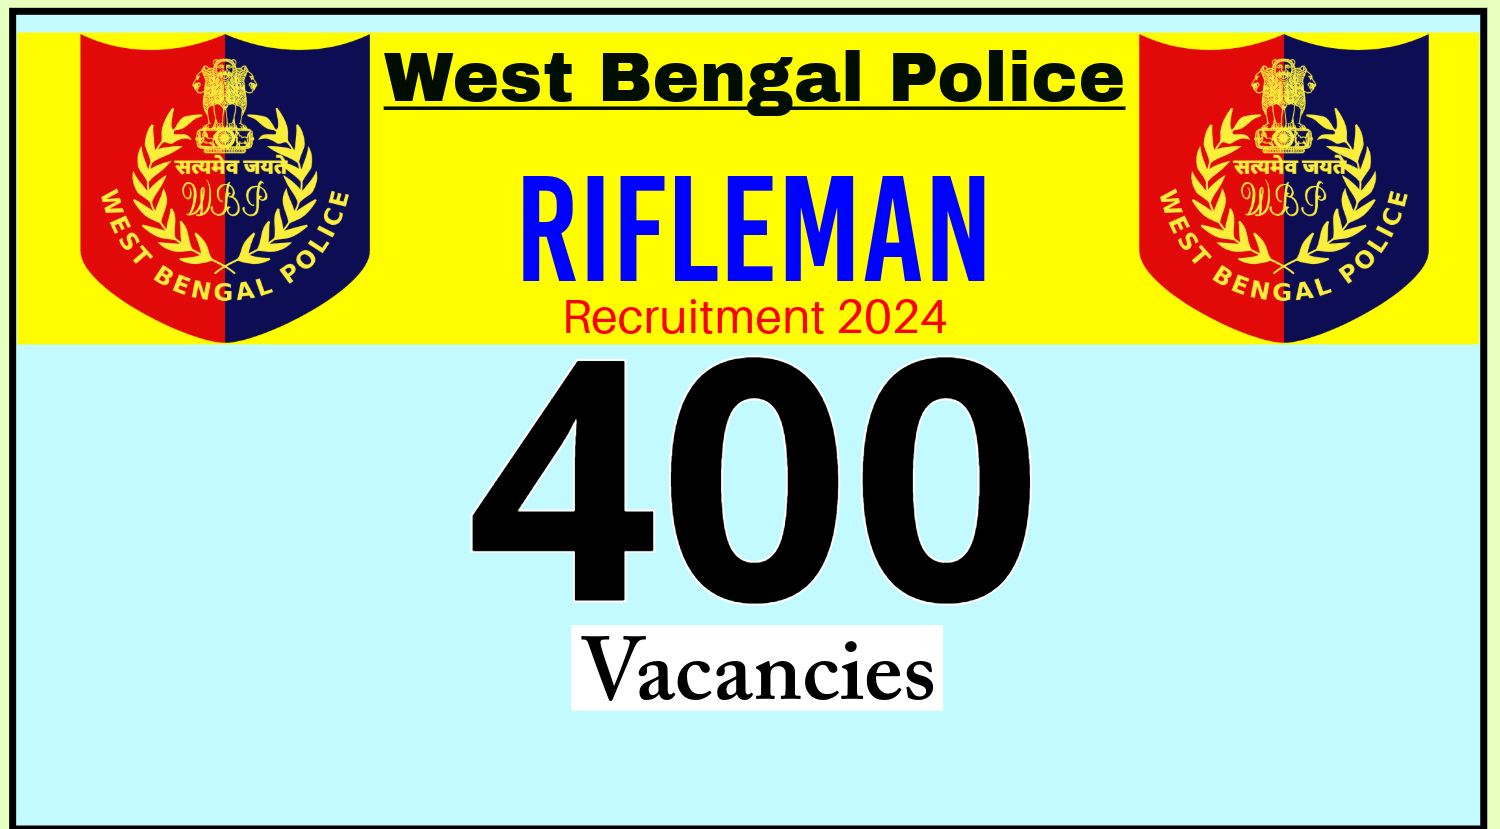 WB Police Rifleman Recruitment 2024